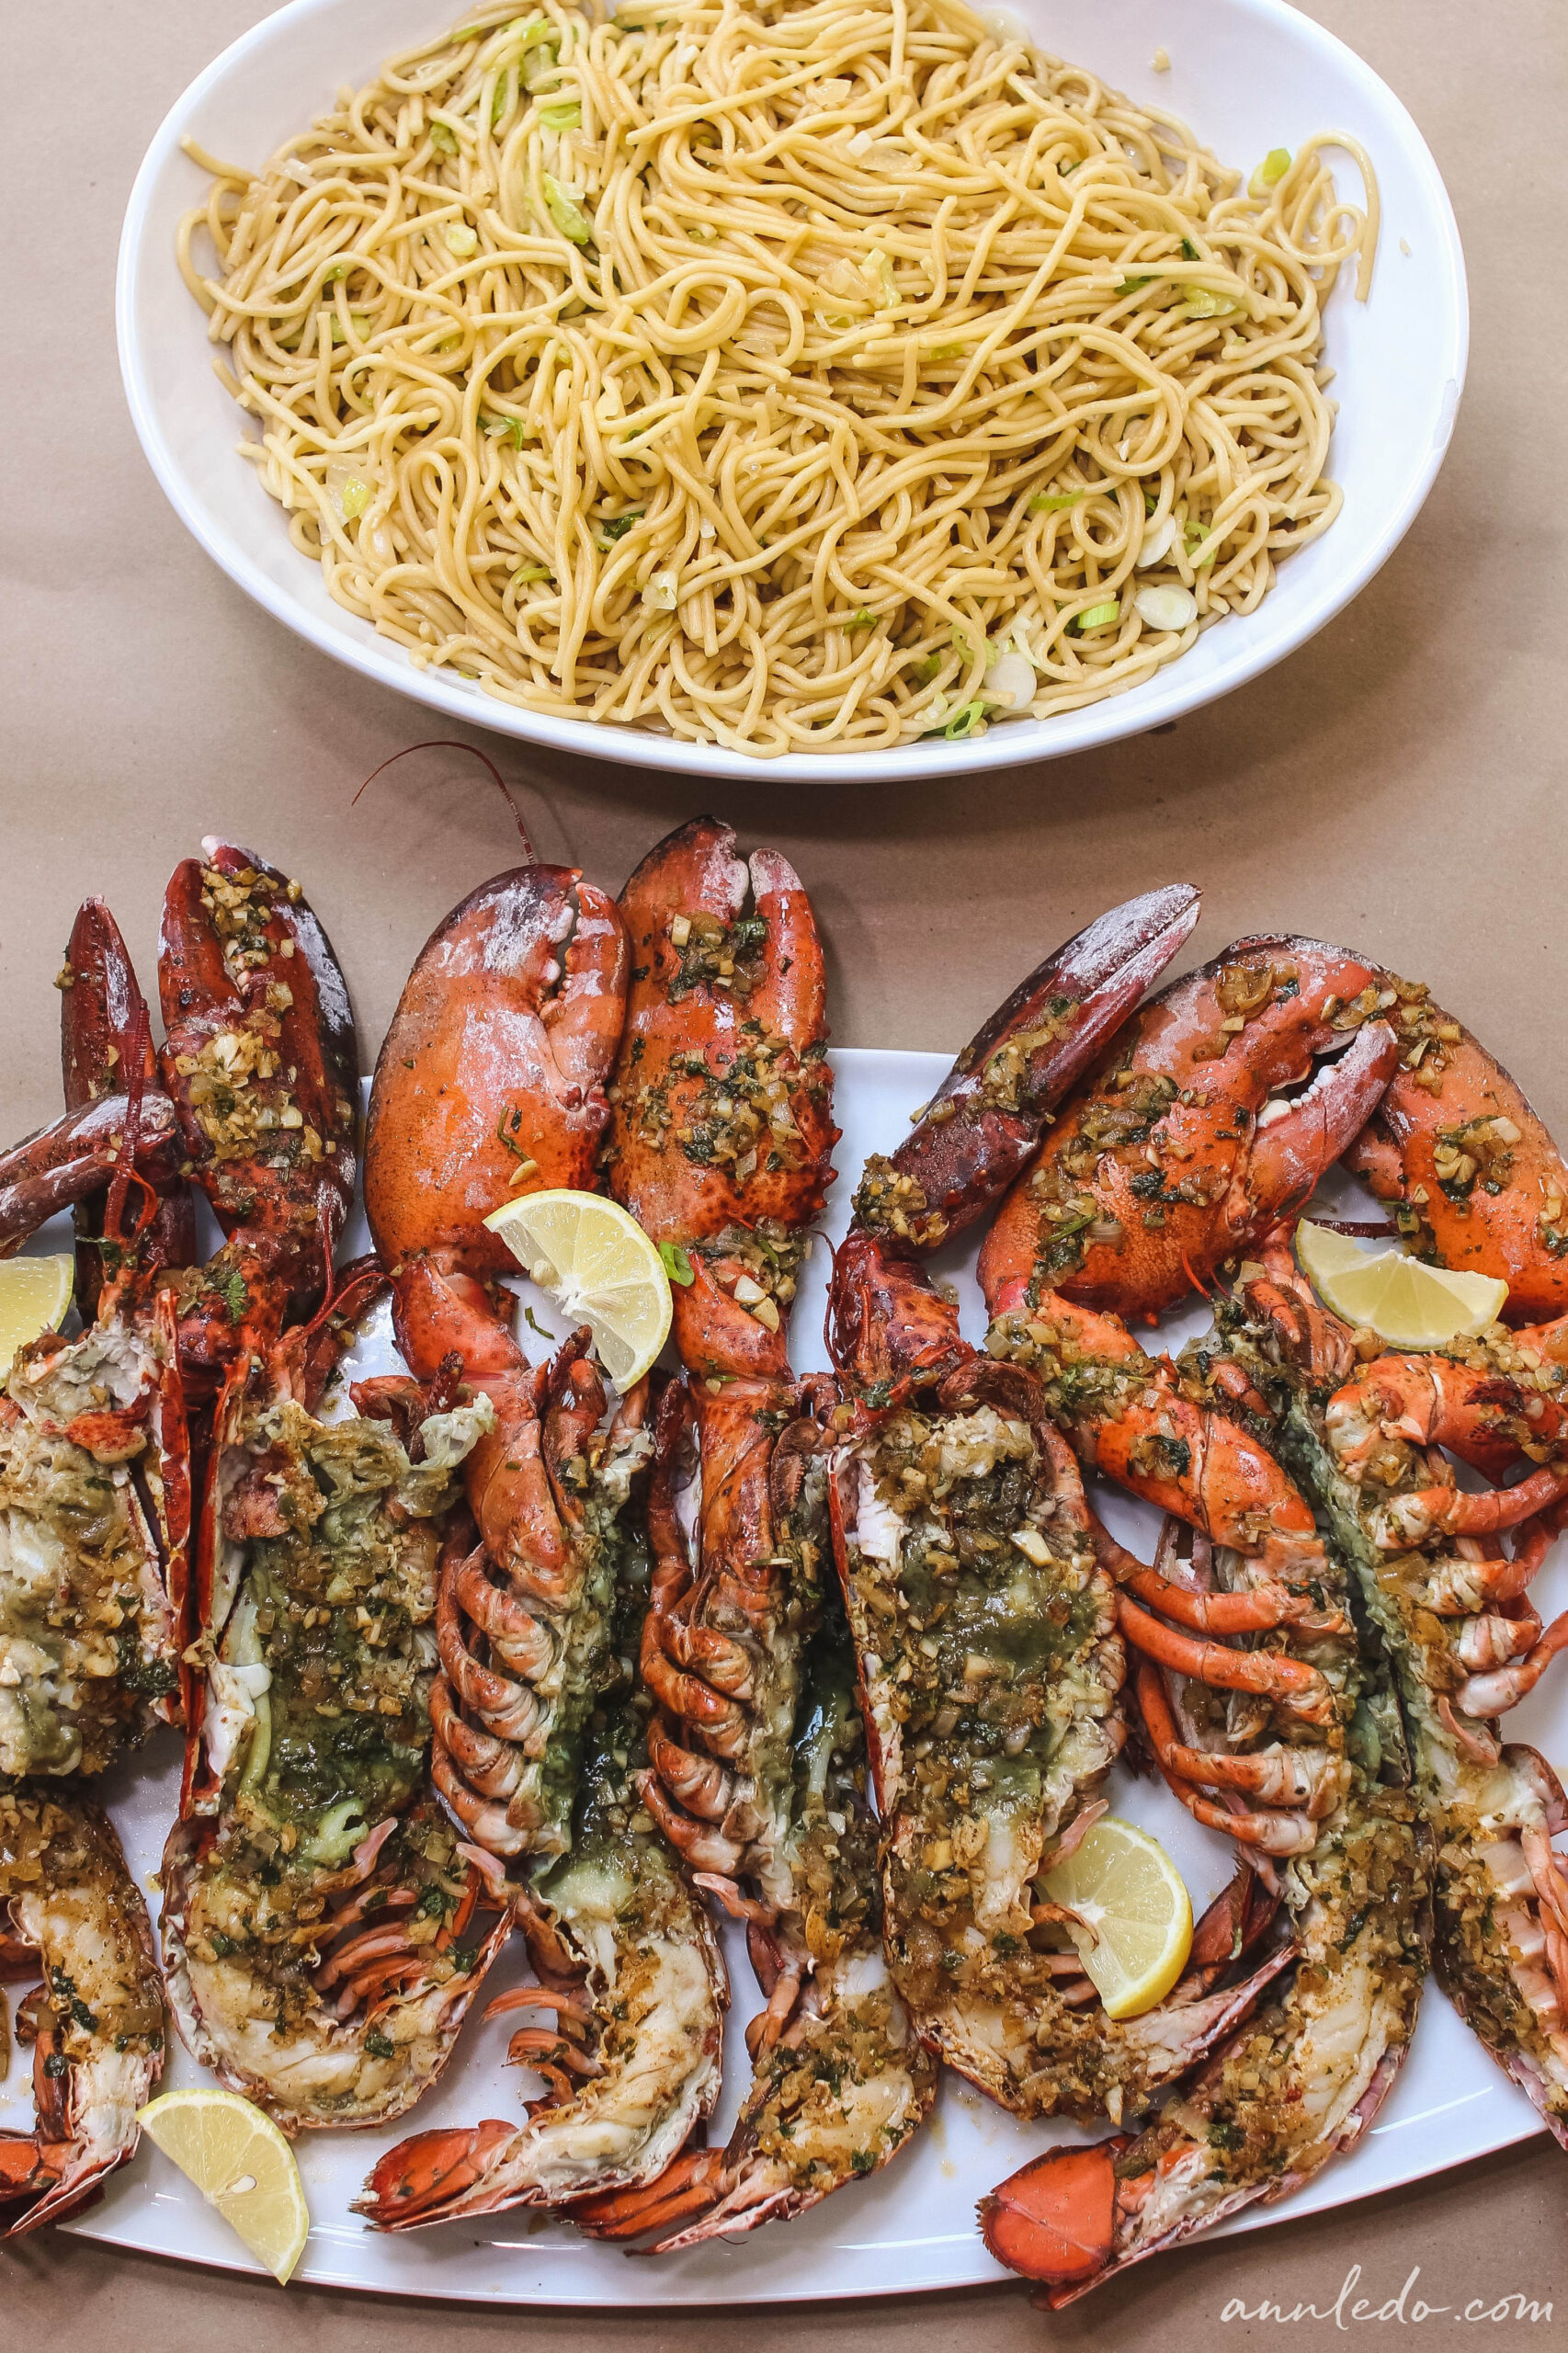 https://annledo.com/wp-content/uploads/2020/06/Roasted-Lobster-in-Cajun-Butter-Garlic-Noodles-3-scaled.jpg